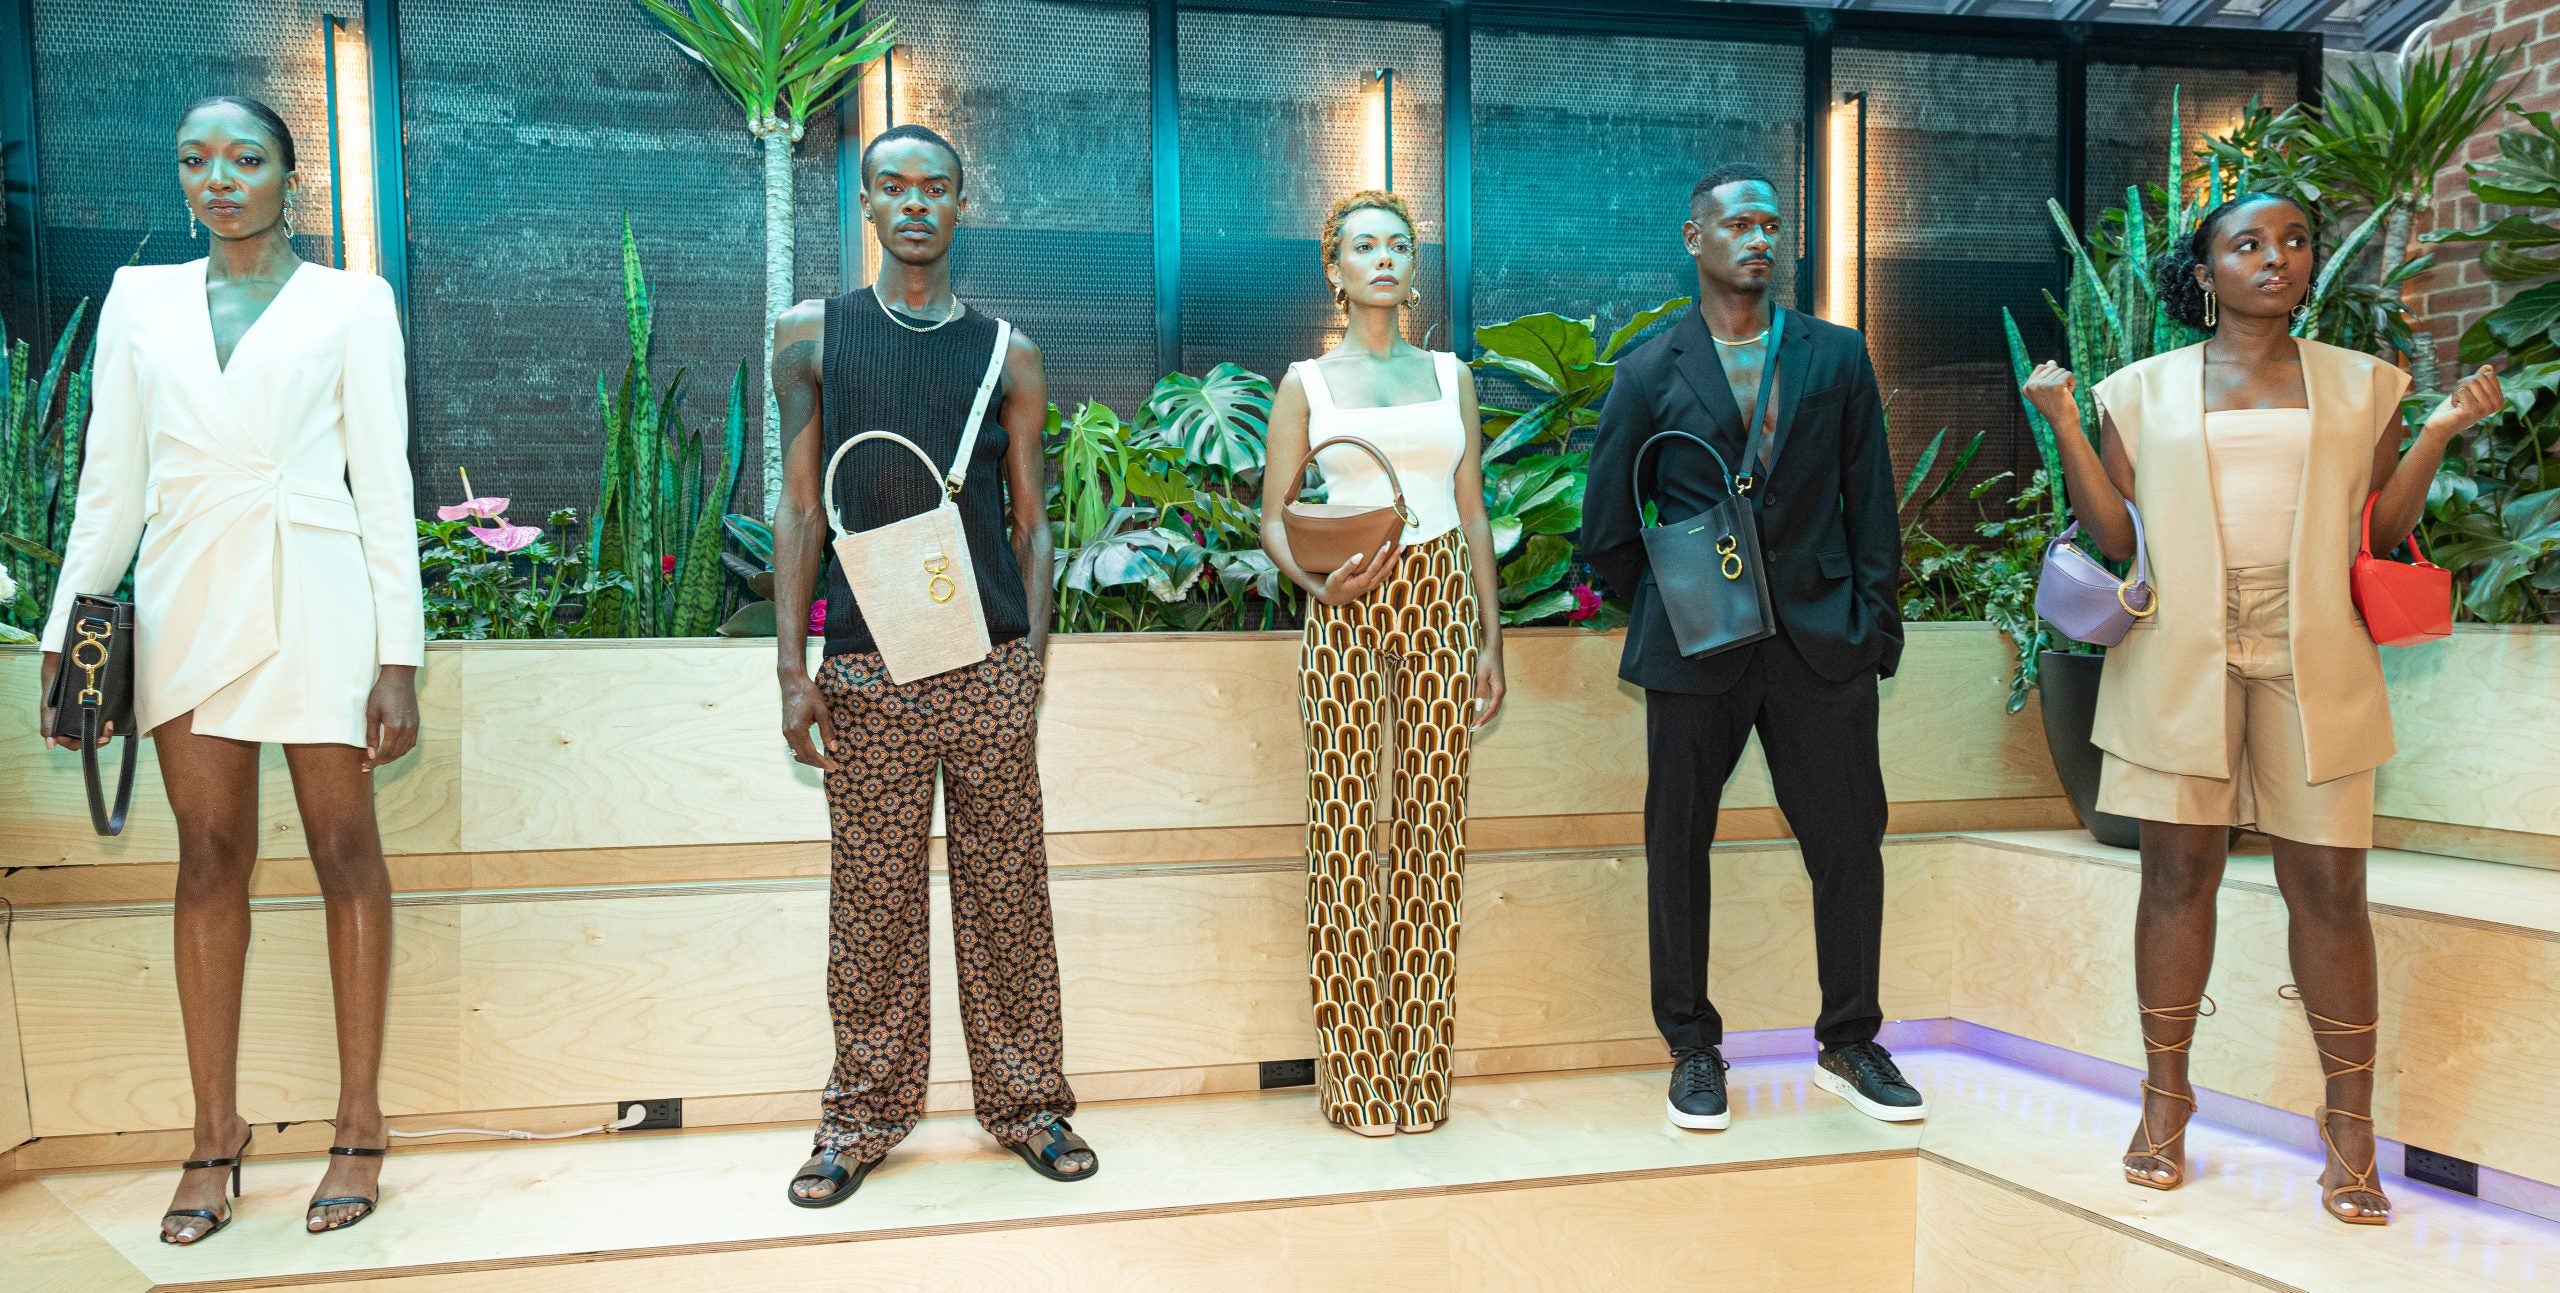 AFROPUNK x Shopify Present Black Fashion Exhibit in NYC